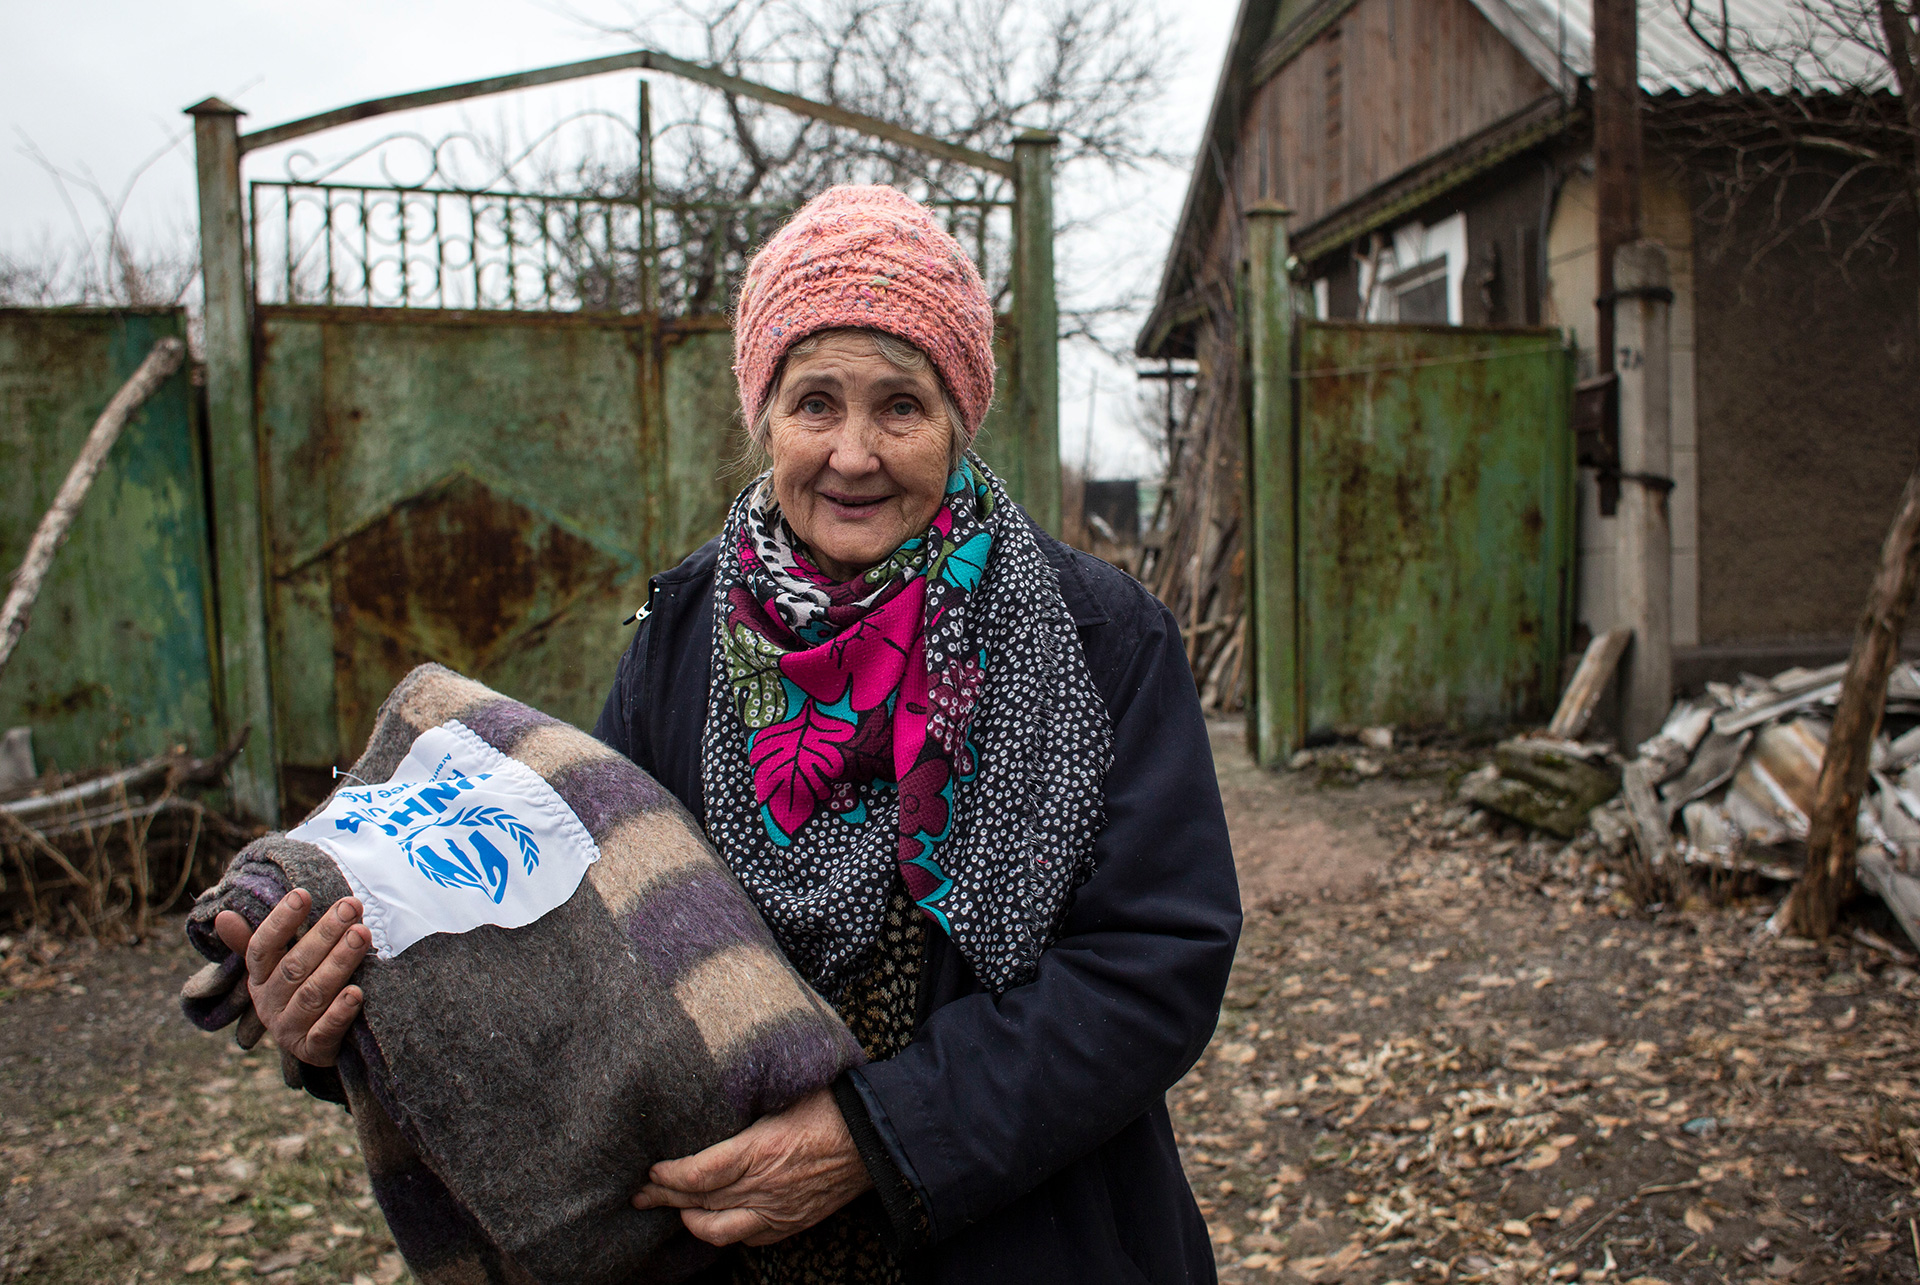 Alte Frau mit UNHCR-Decke im Arm